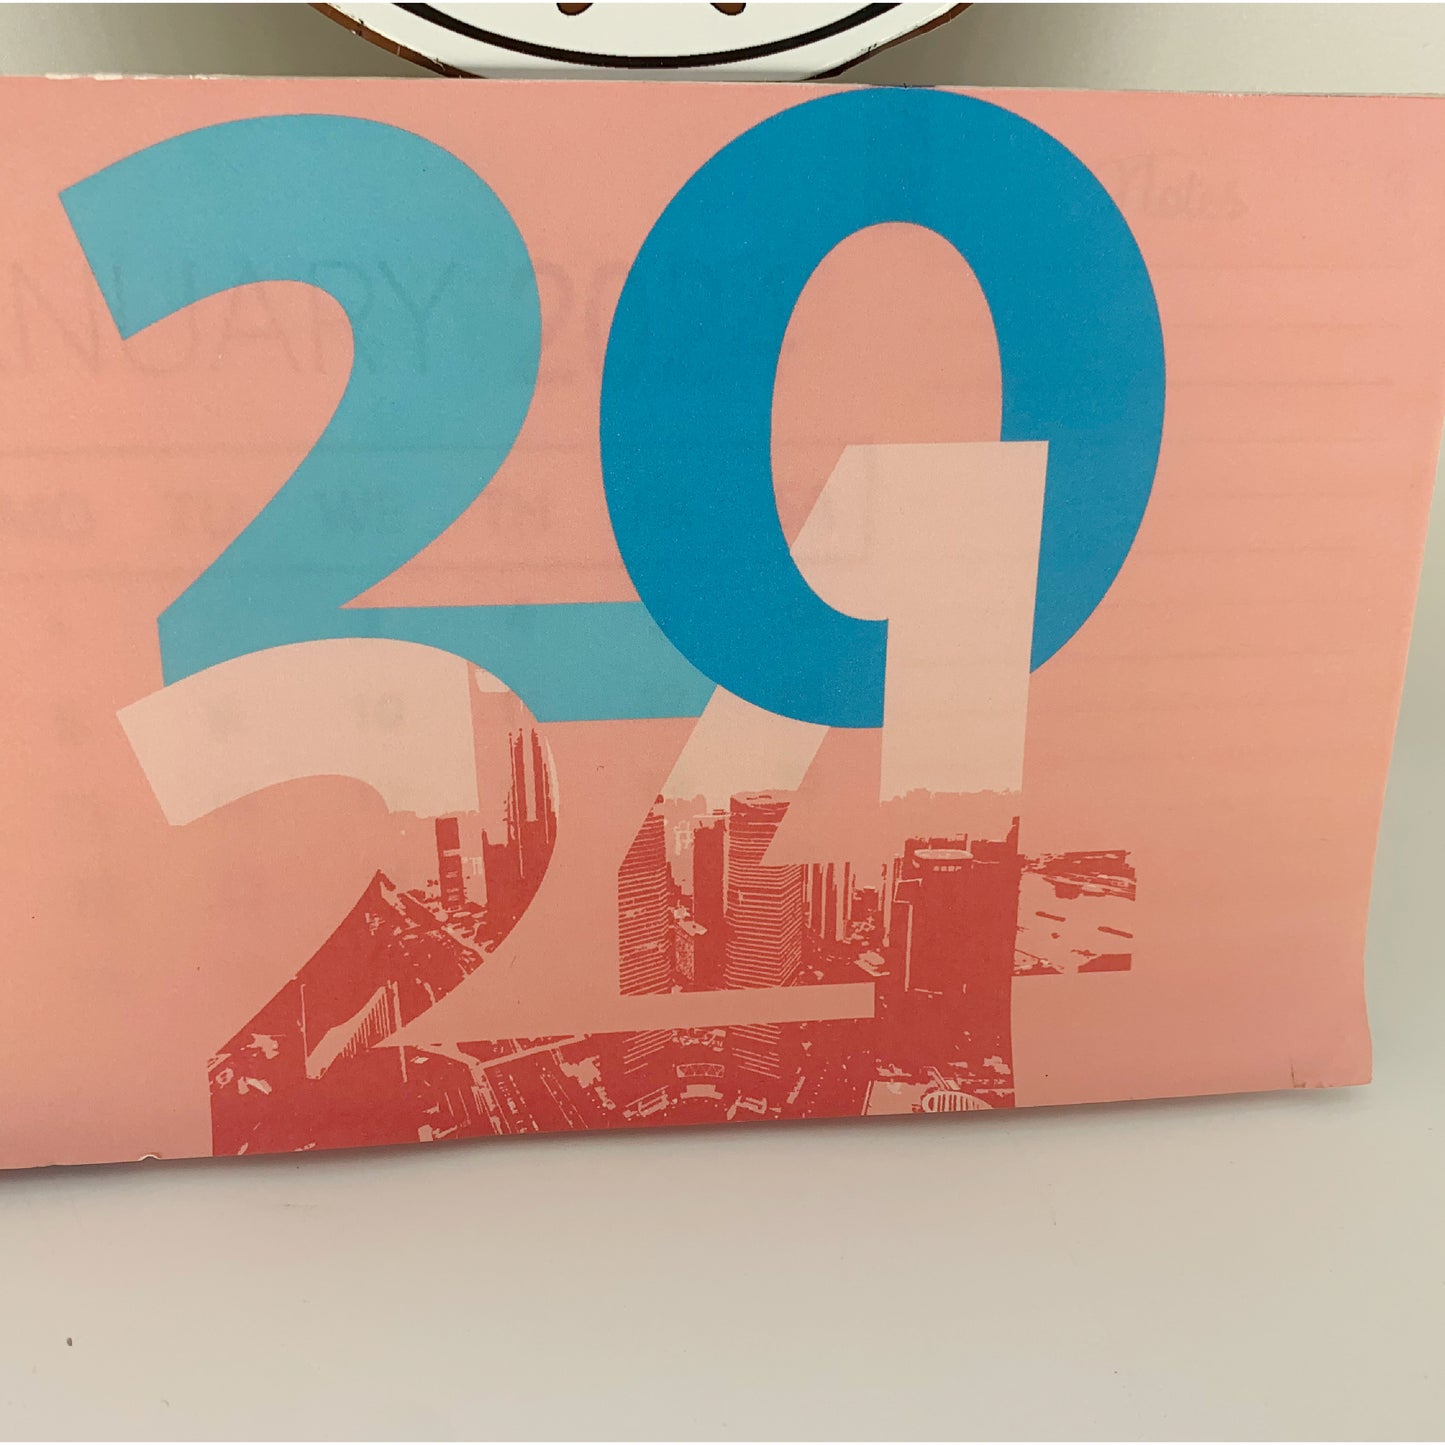 2024 Customized Family Calendar Personalized Calendar Bulk Family Calendar Giveaway Affordable High Quality Calendar Bulk Company Calendar